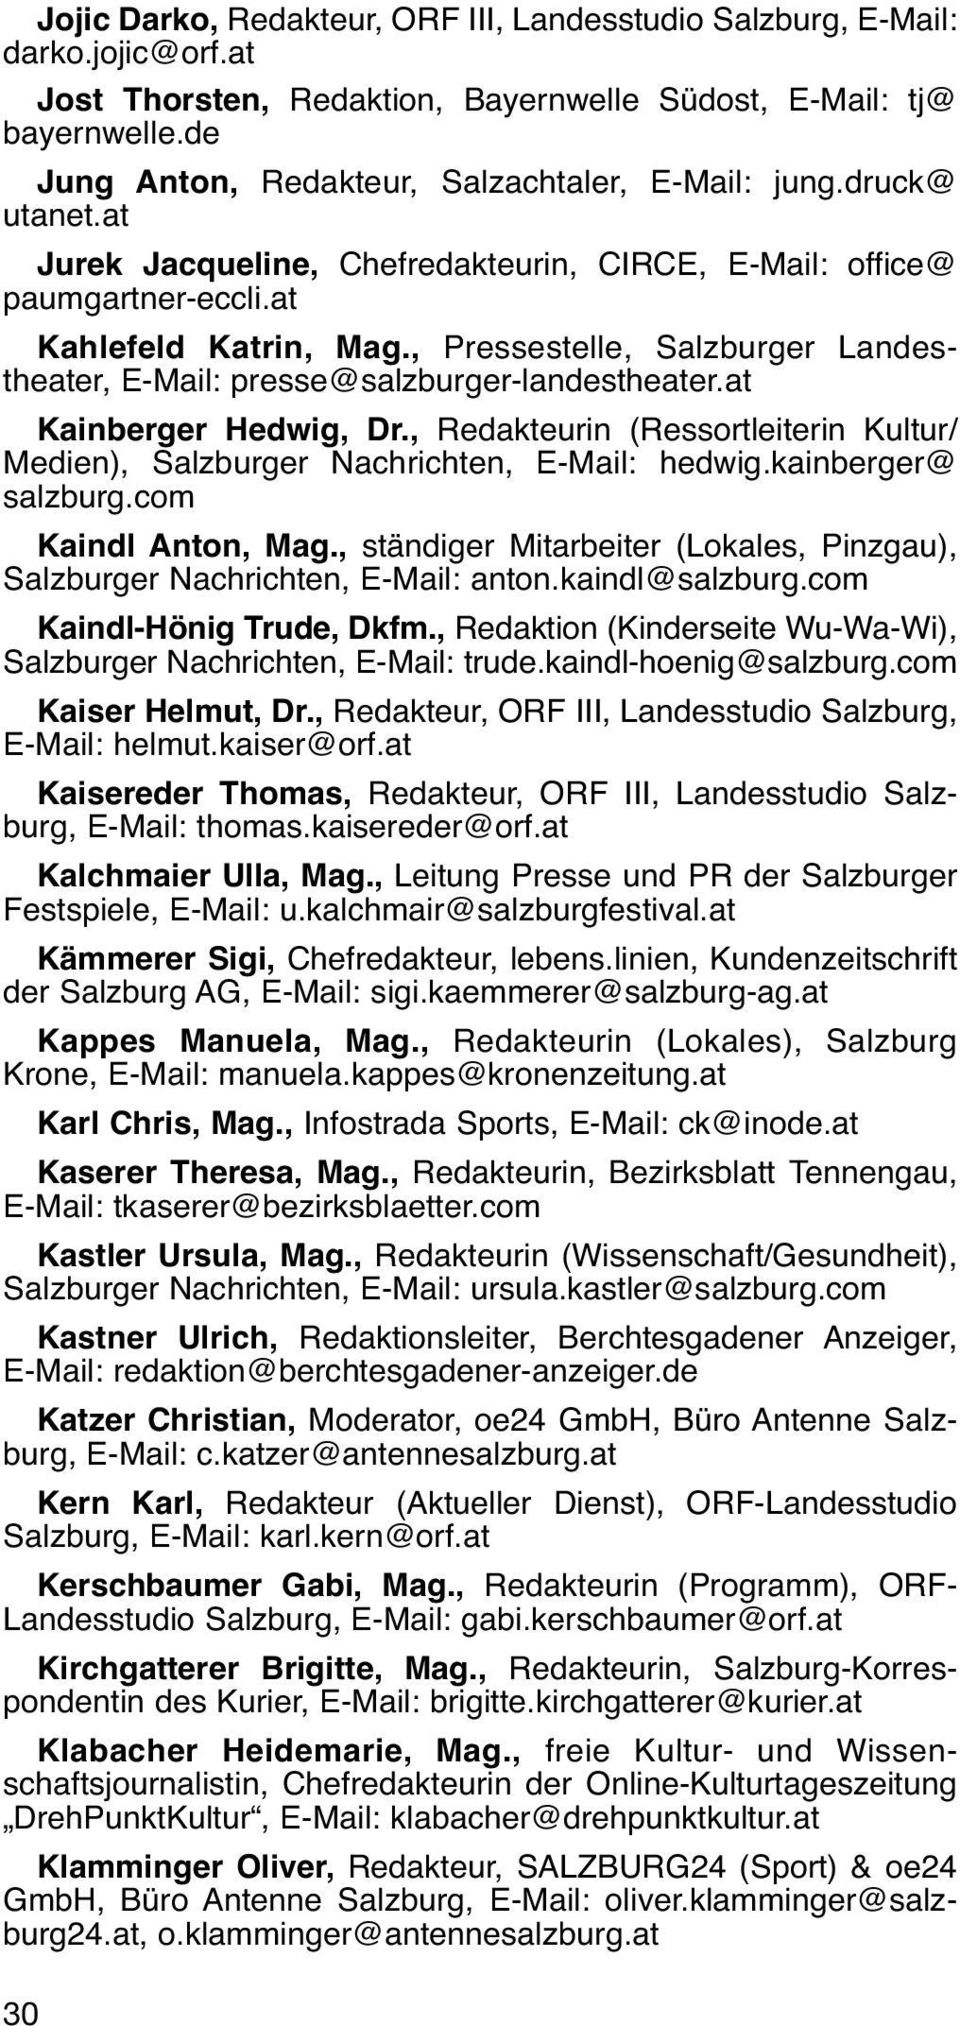 , Pressestelle, Salzburger Landes - theater, E-Mail: presse@salzburger-landestheater.at Kainberger Hedwig, Dr., Redakteurin (Ressortleiterin Kultur/ Medien), Salzburger Nachrichten, E-Mail: hedwig.